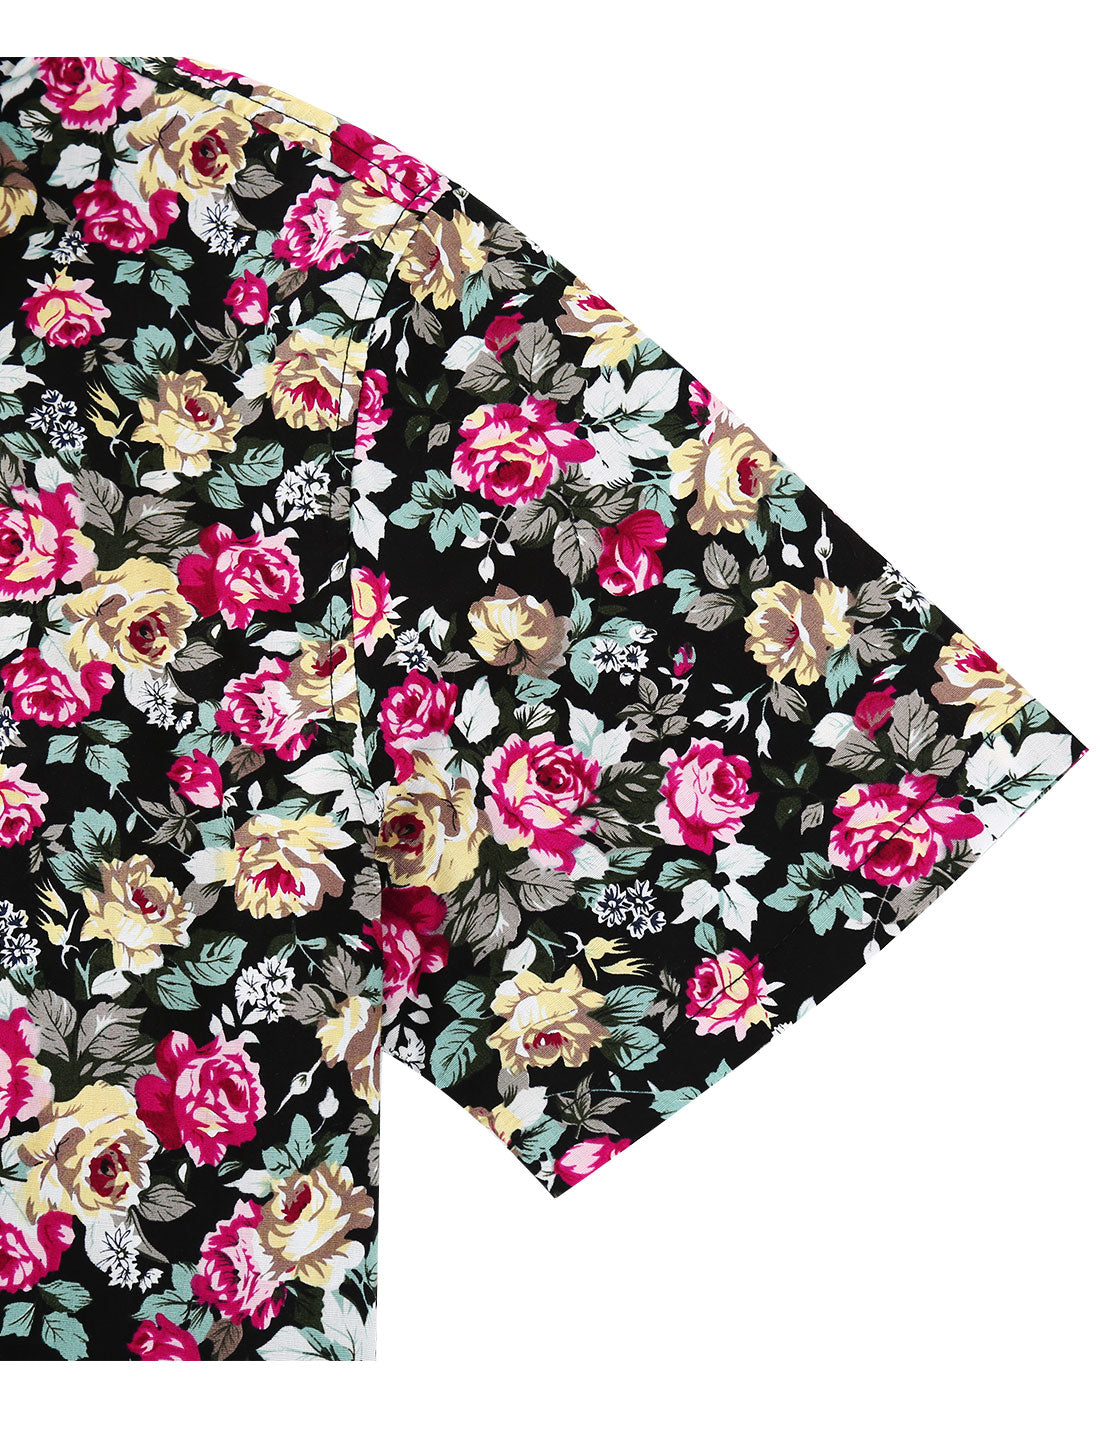 Bublédon Short Sleeve Floral Print Cotton Beach Hawaiian Shirt